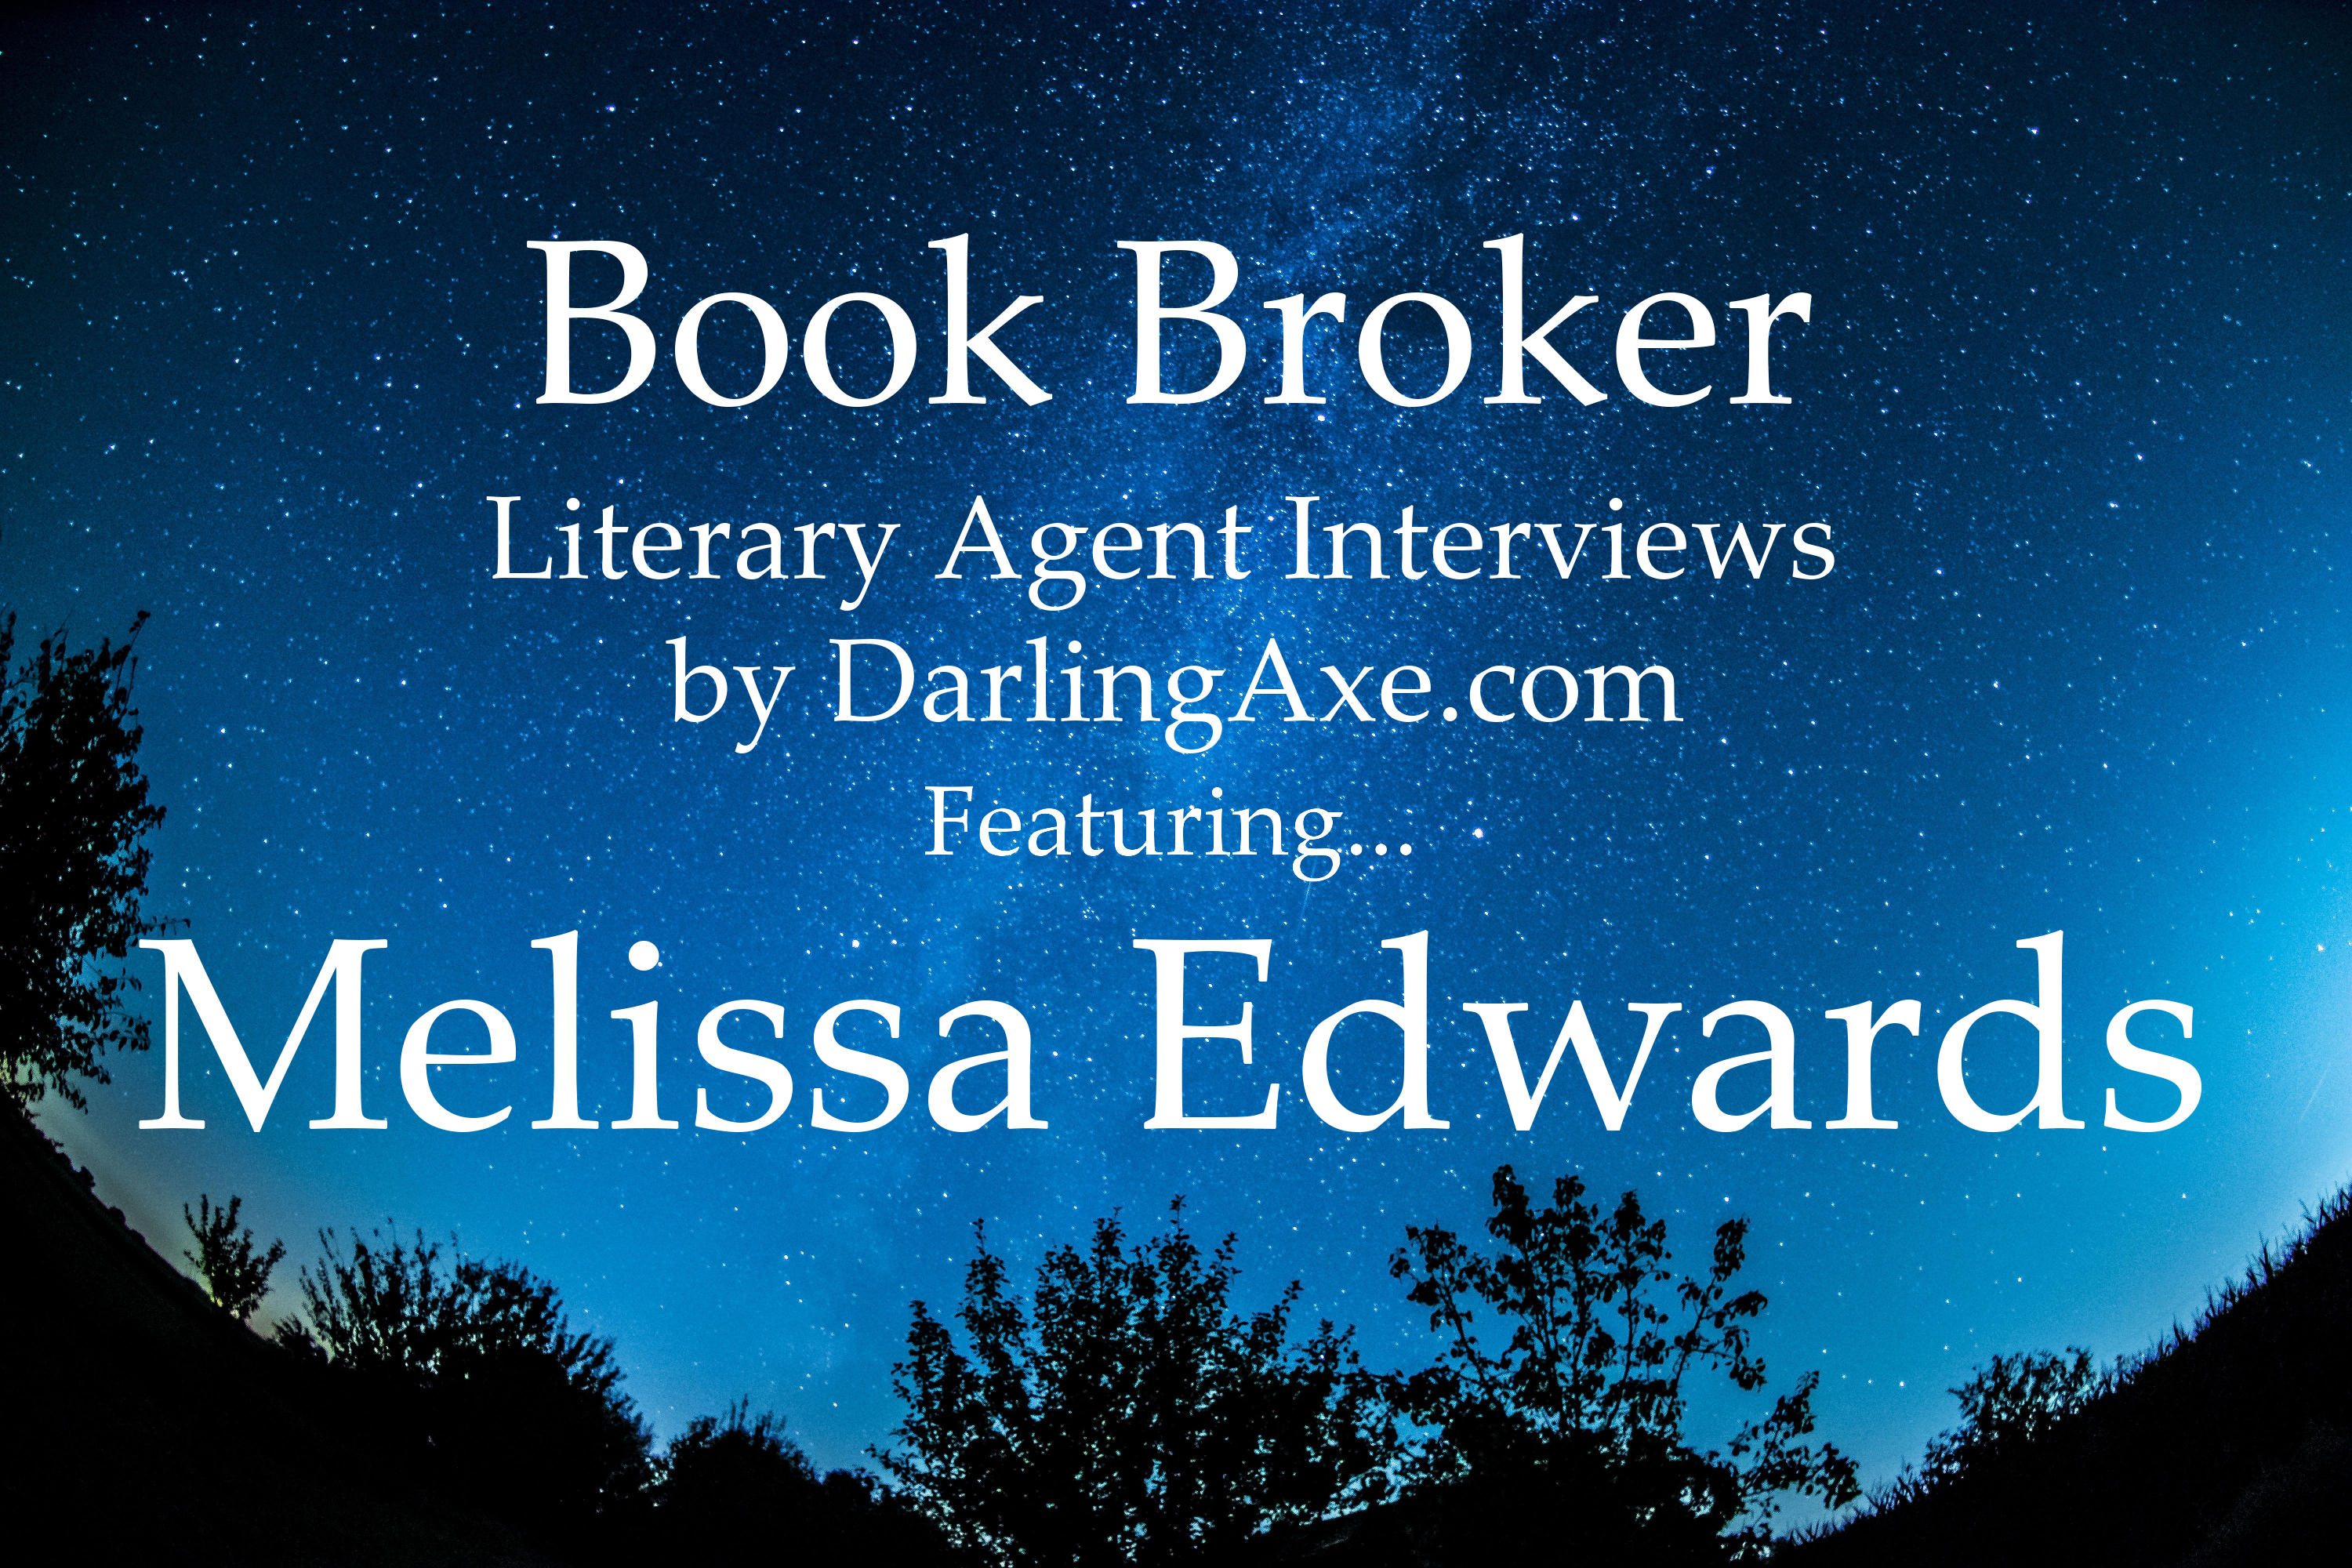 Book Broker: an interview with Melissa Edwards